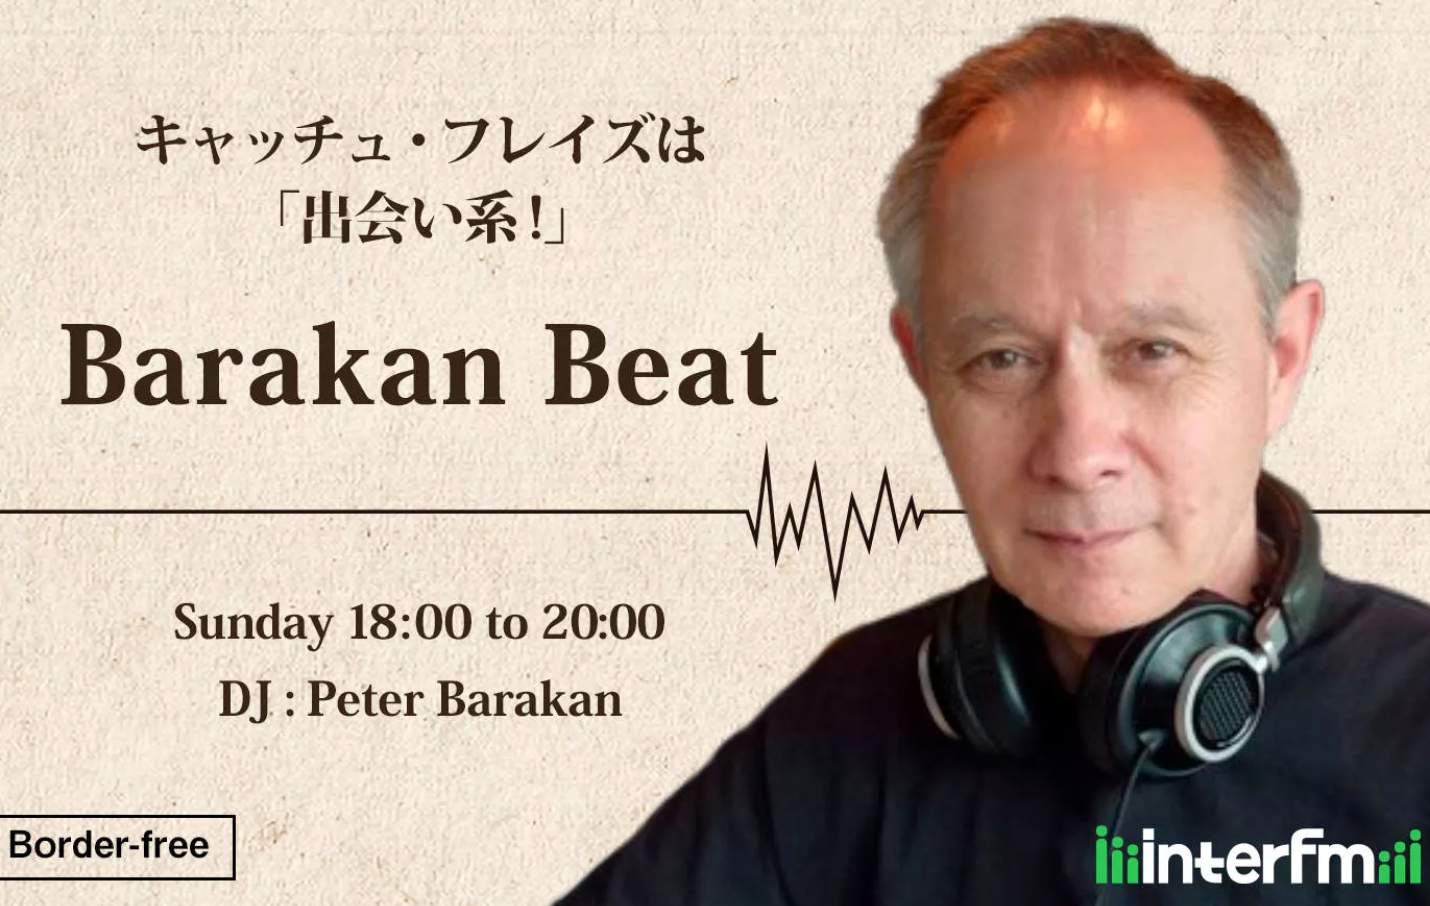 Barakan Beatのヘッダー画像